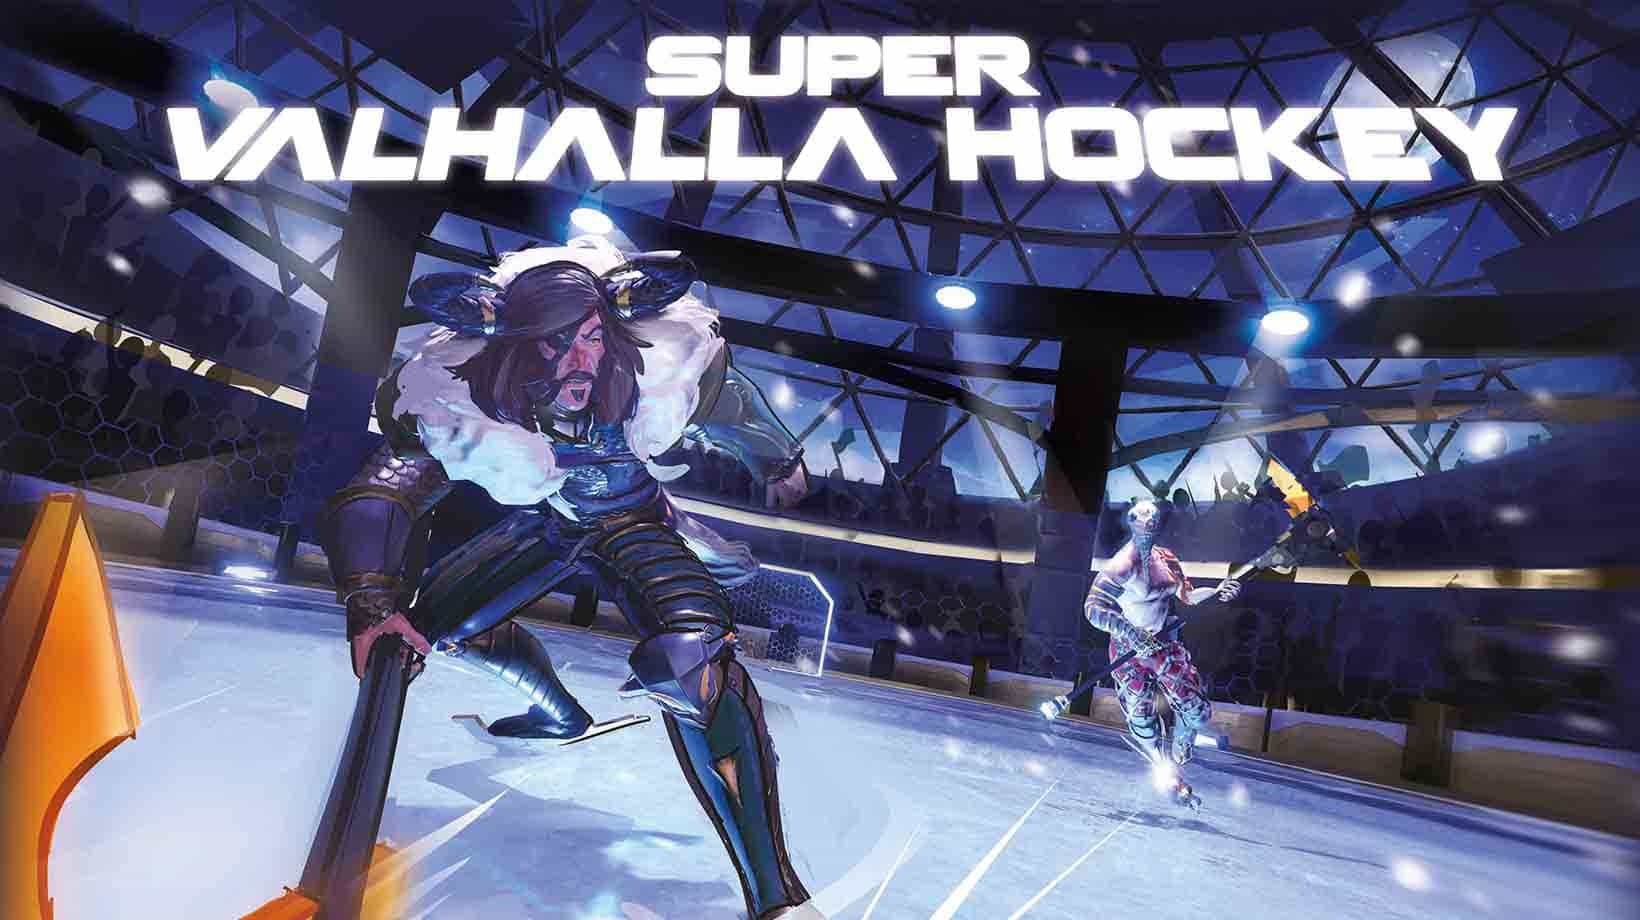 super-valhalla-hockey